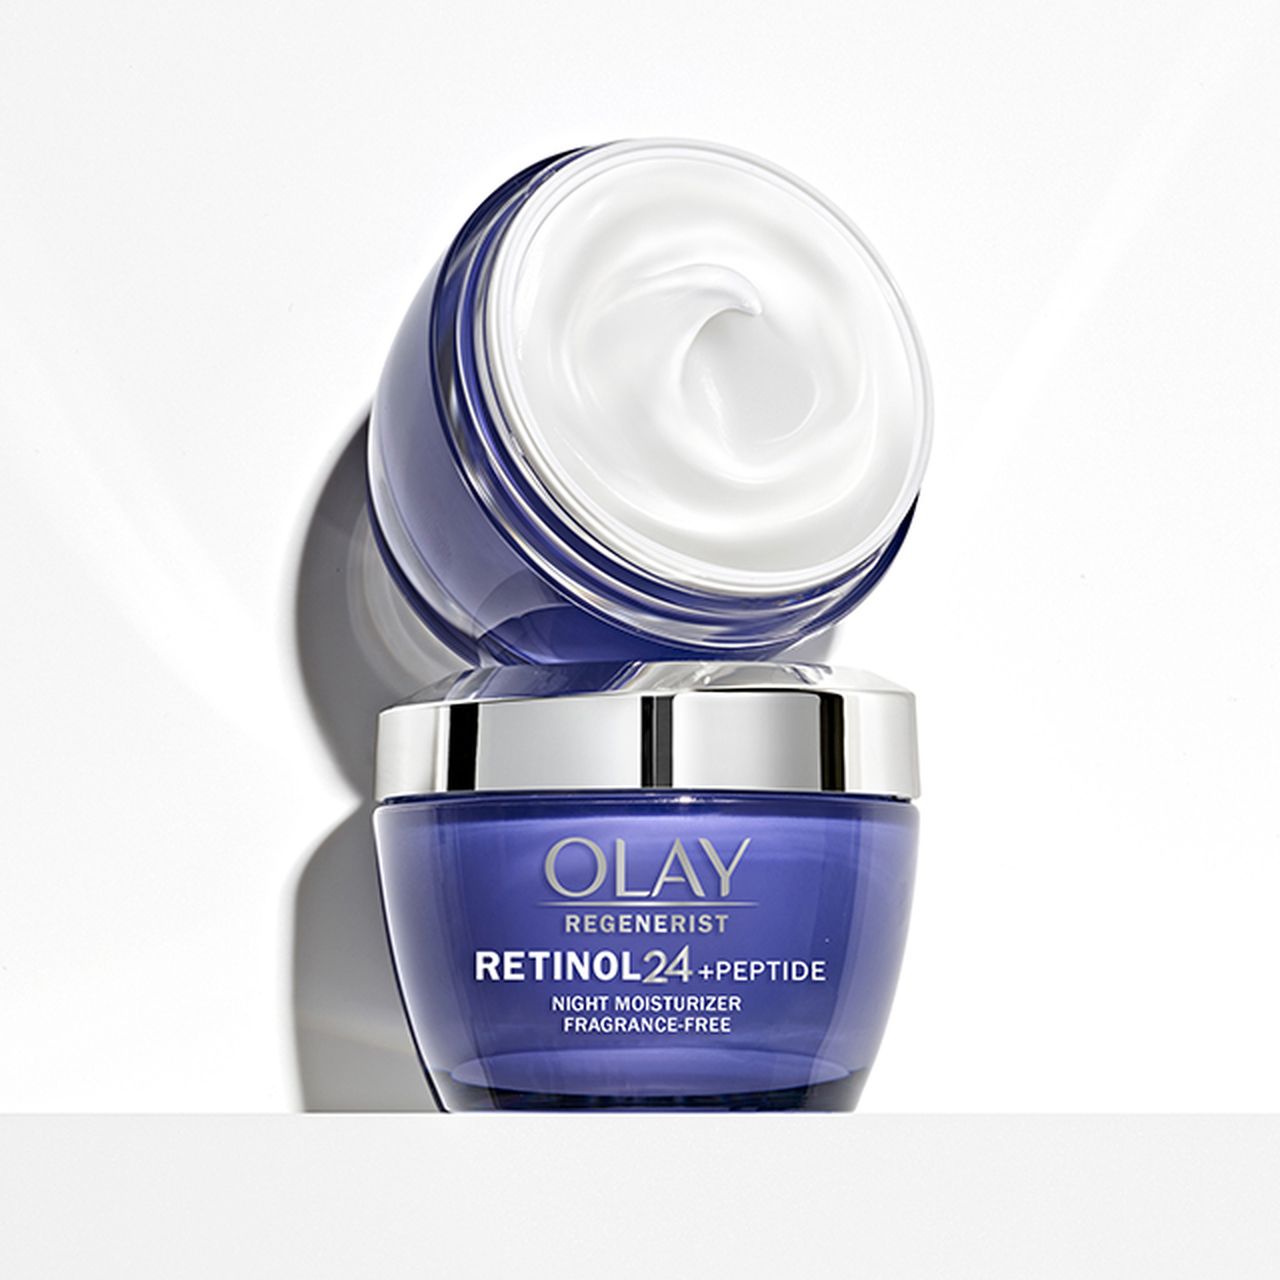 Retinol24 + Peptide Night Face Moisturizer Fragrance Free